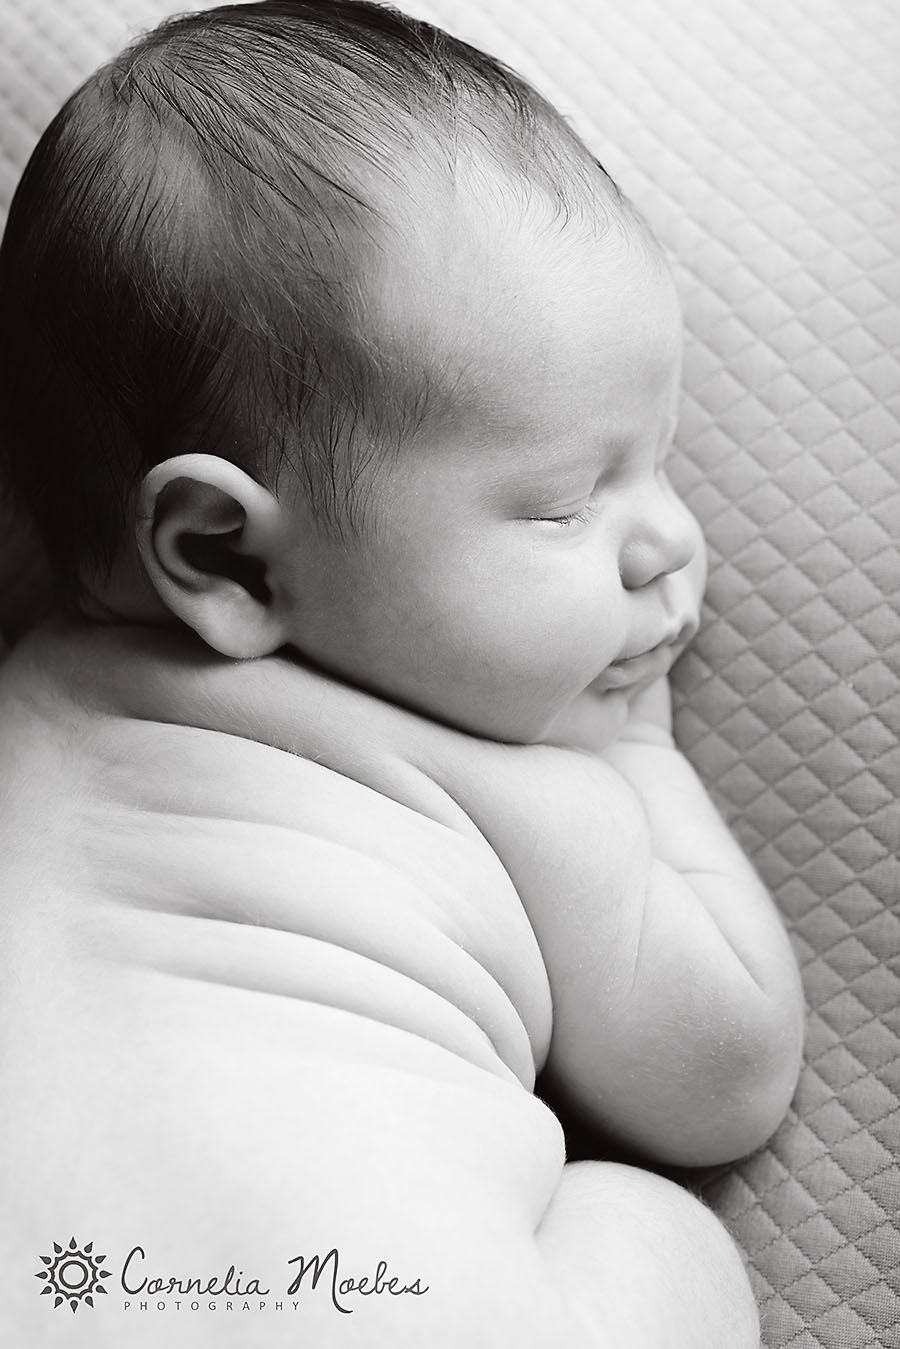 Neugeborenenfotografie-Neugeborenenfotos-Babyfotografie-Babyfotos-Fotografie-Zug-Zürich-Luzern-Cornelia-Moebes-Photography-R1